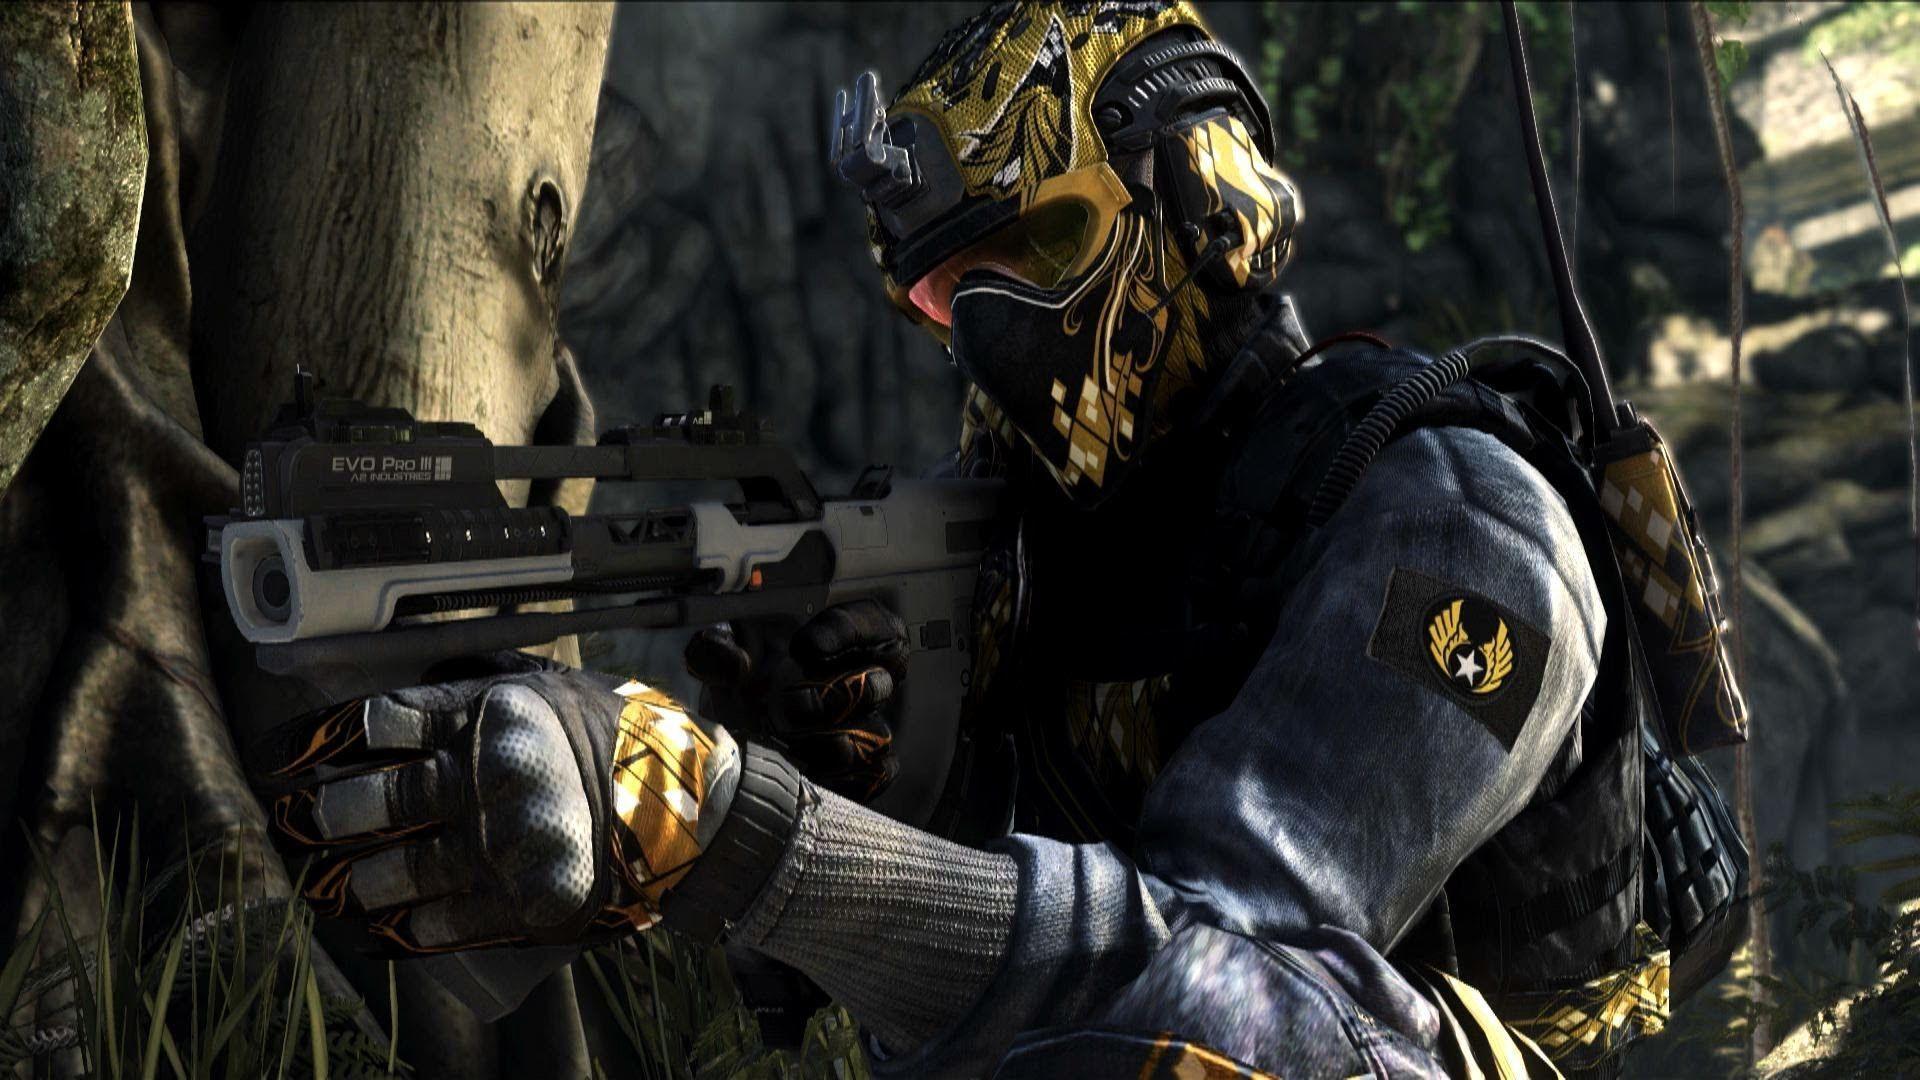 COD: Ghosts DLC 2 gameplay trailer brings Predator to Extinction